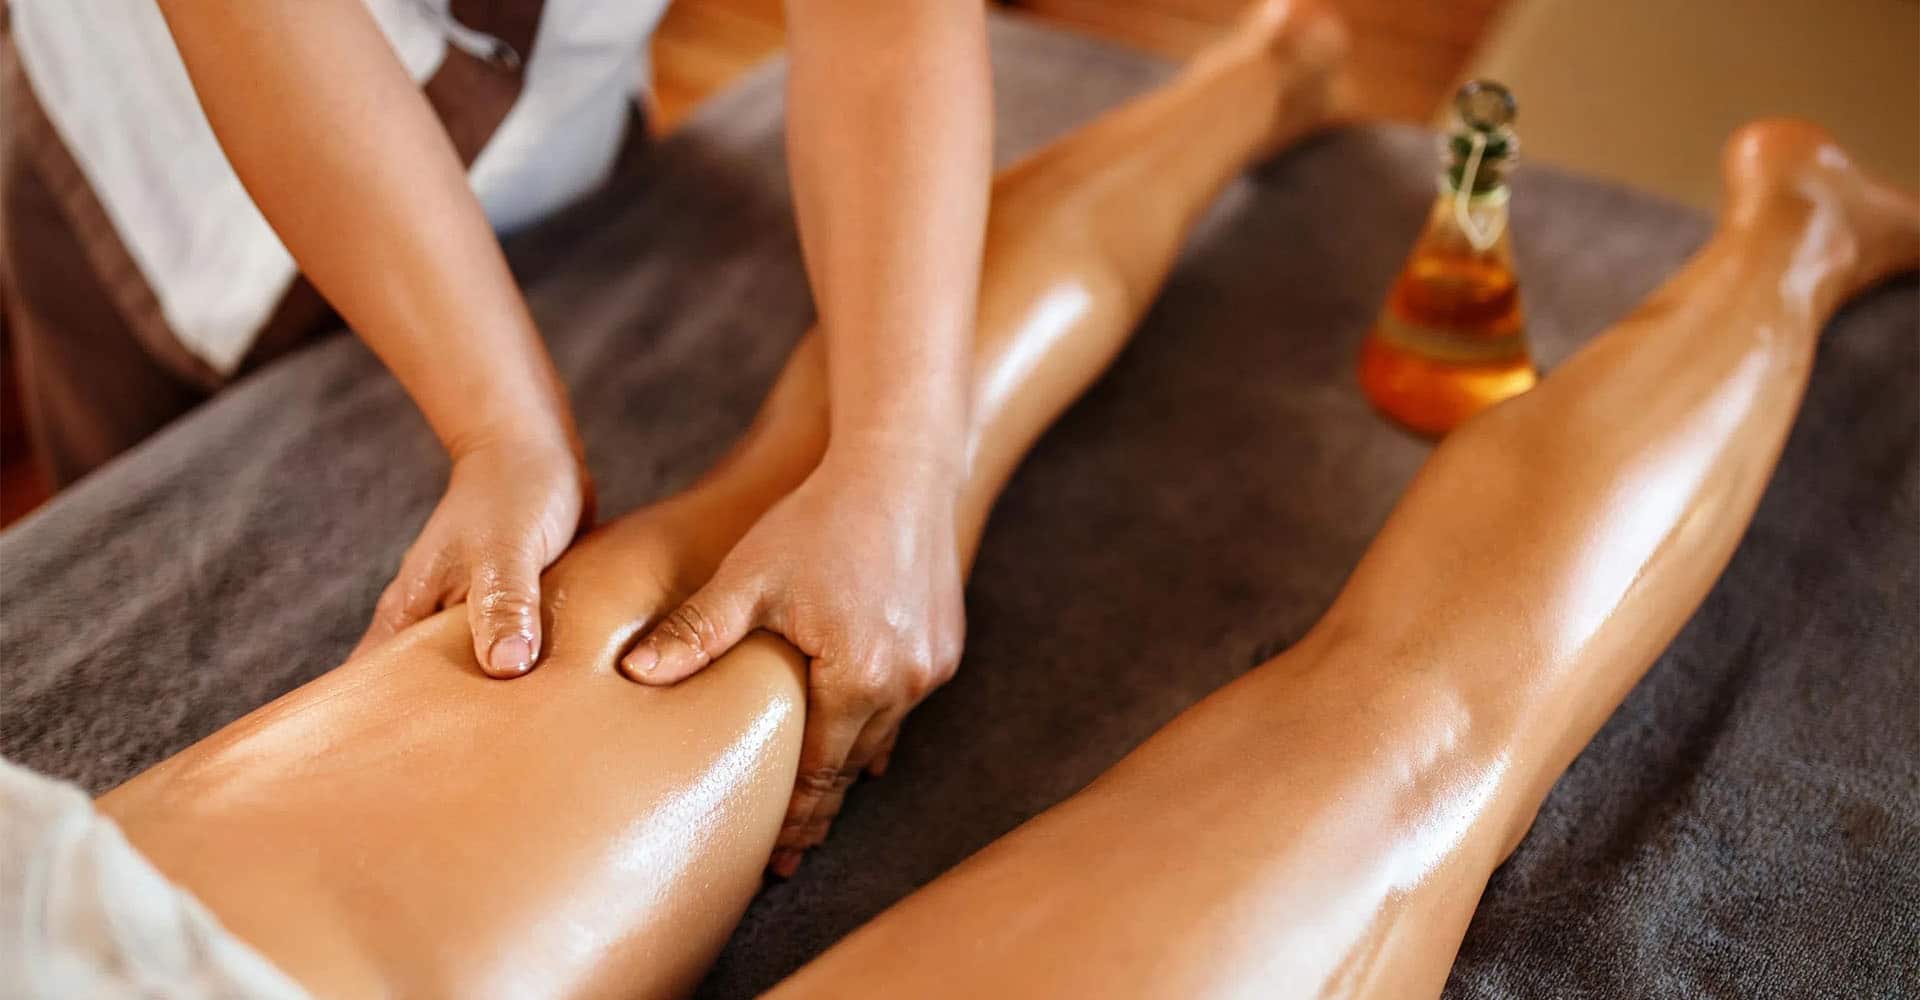 Woman gets Ayurveda massage Abhyanga with oil